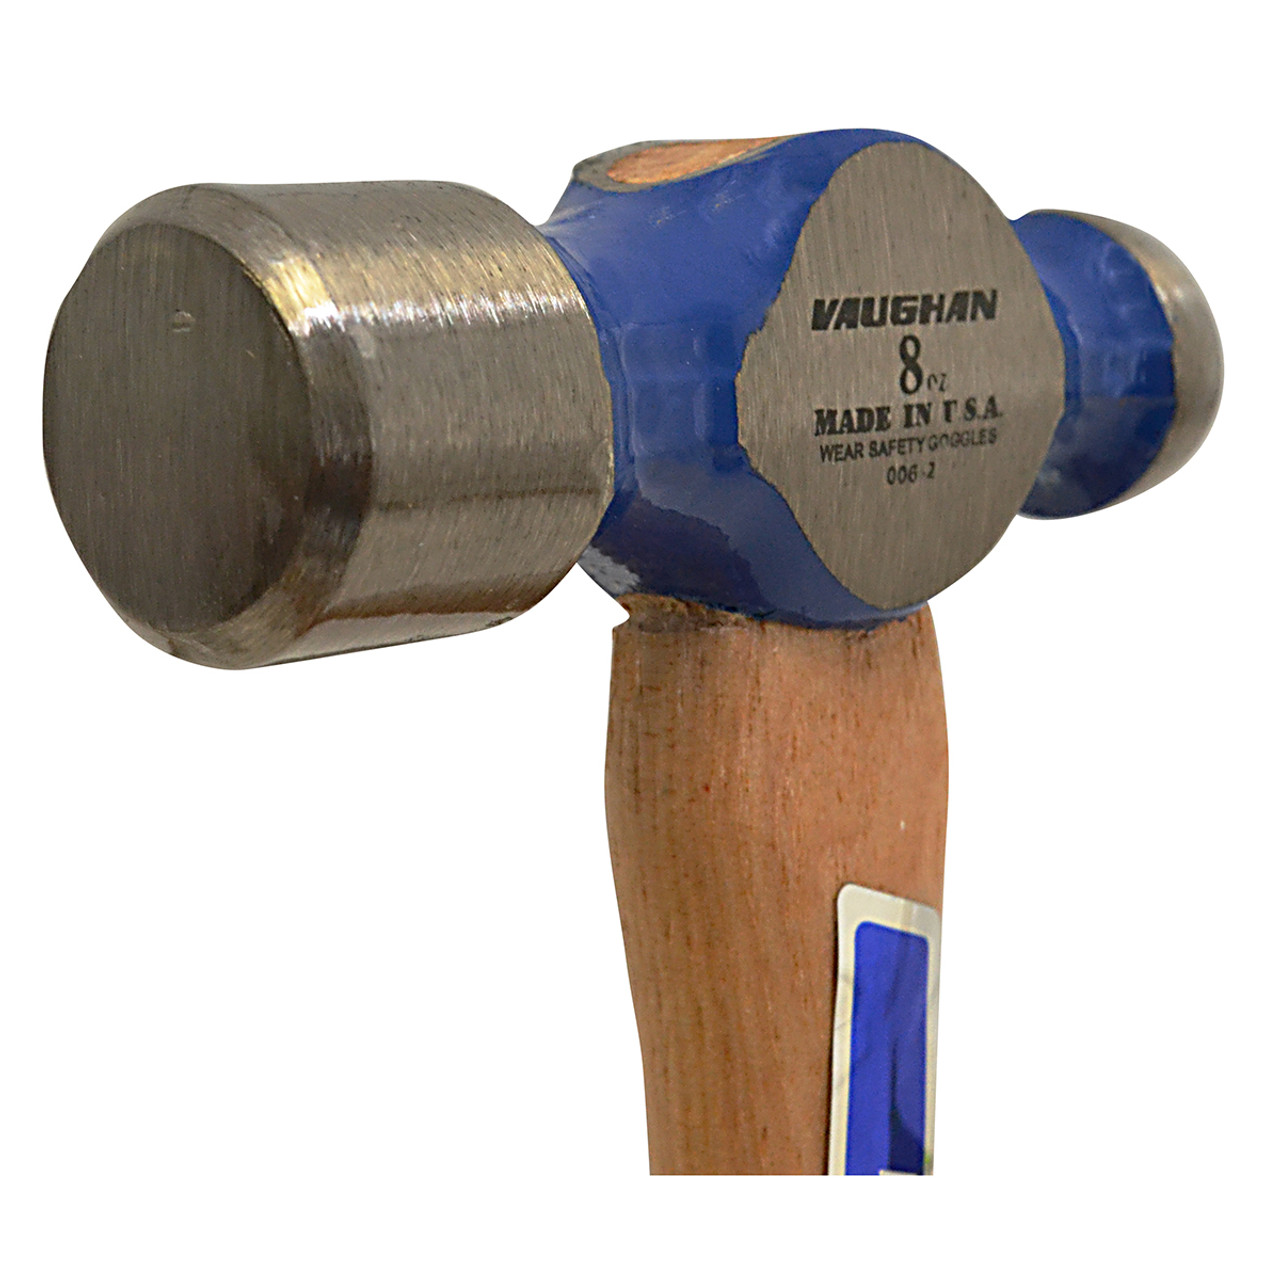 Vaughan 8 oz. Ball Pein, 11 3/4 wood handle